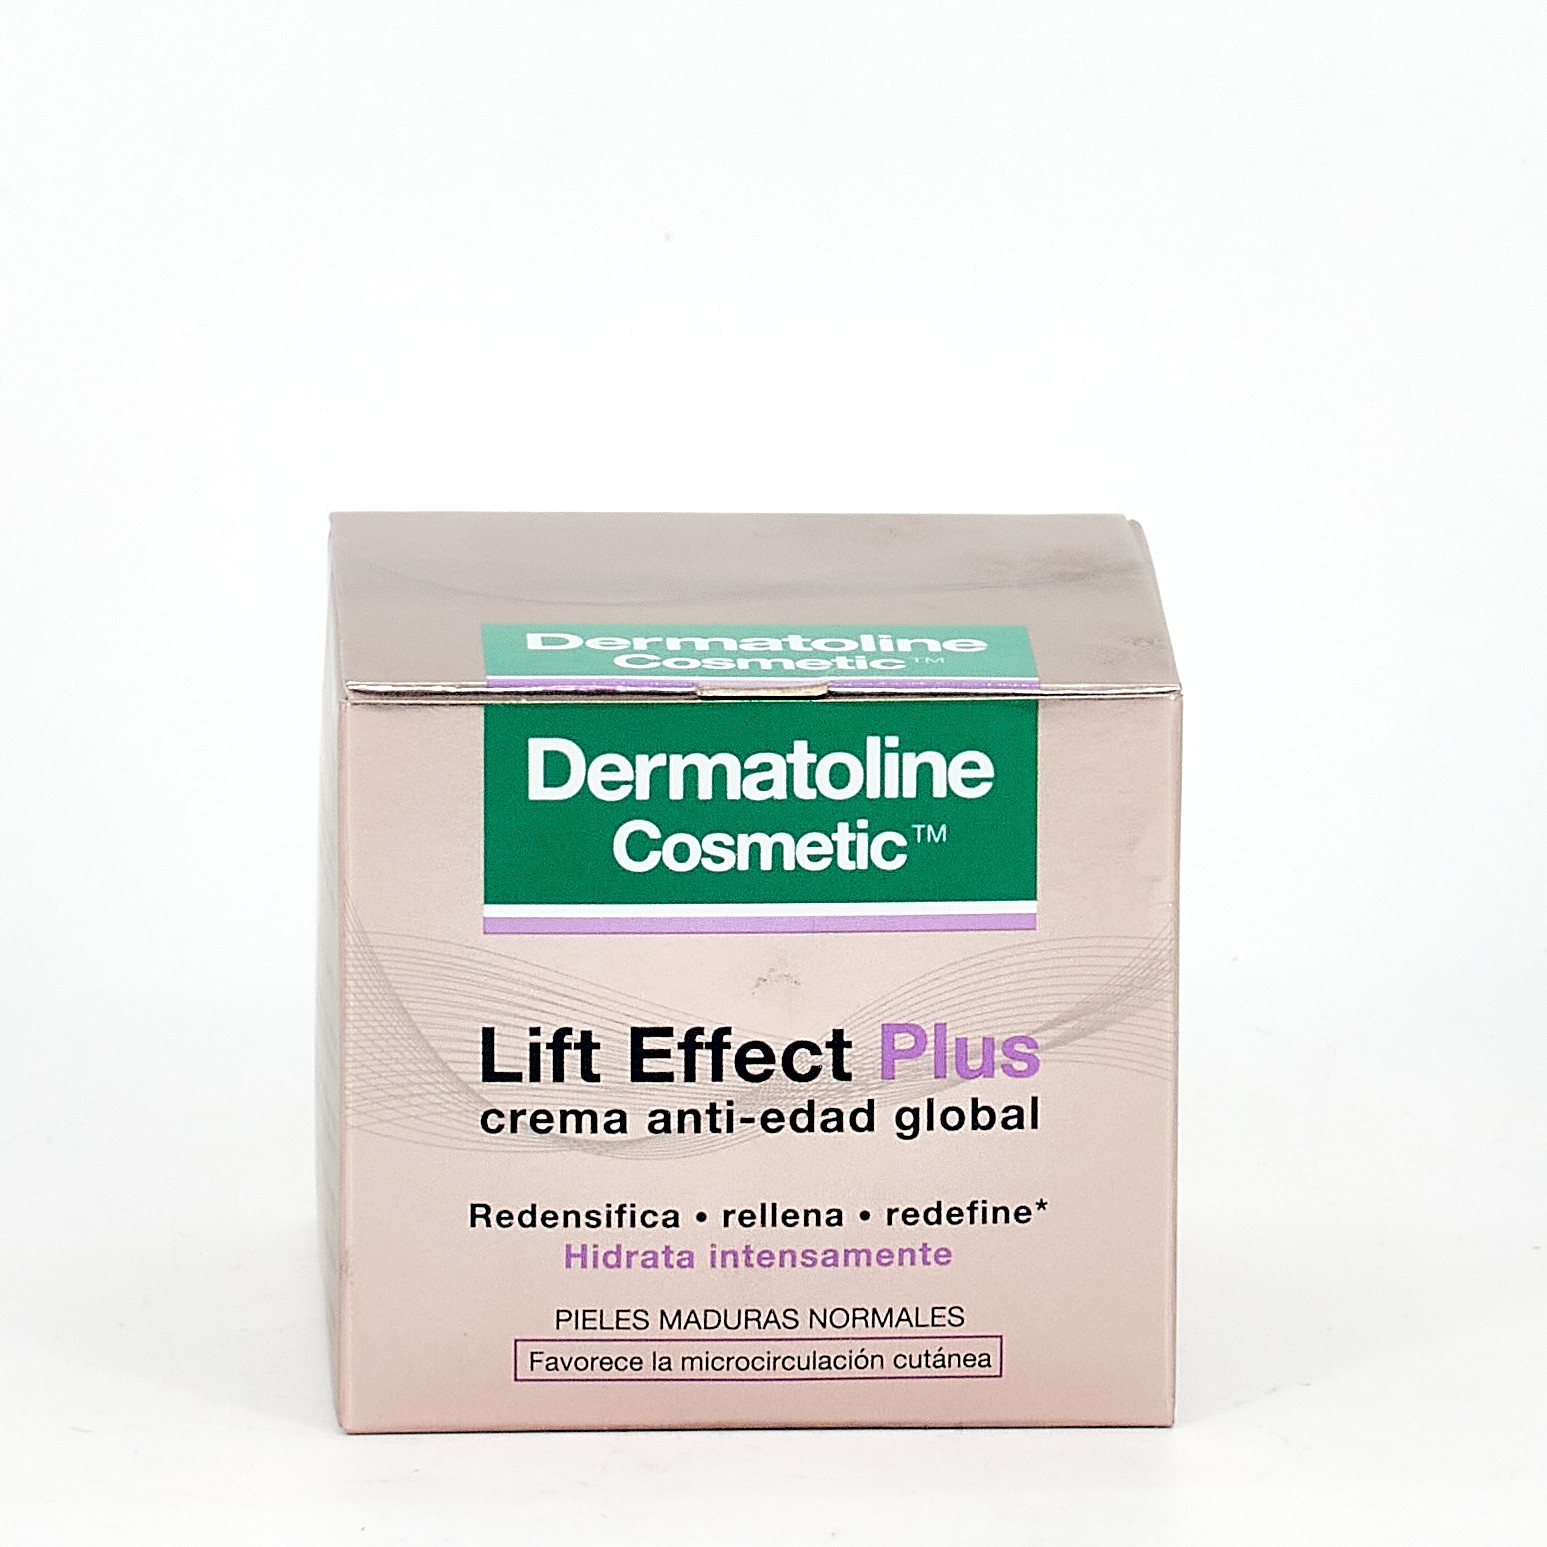 Dermatoline Lift Effect Plus Crema Antiedad Global, 50ml